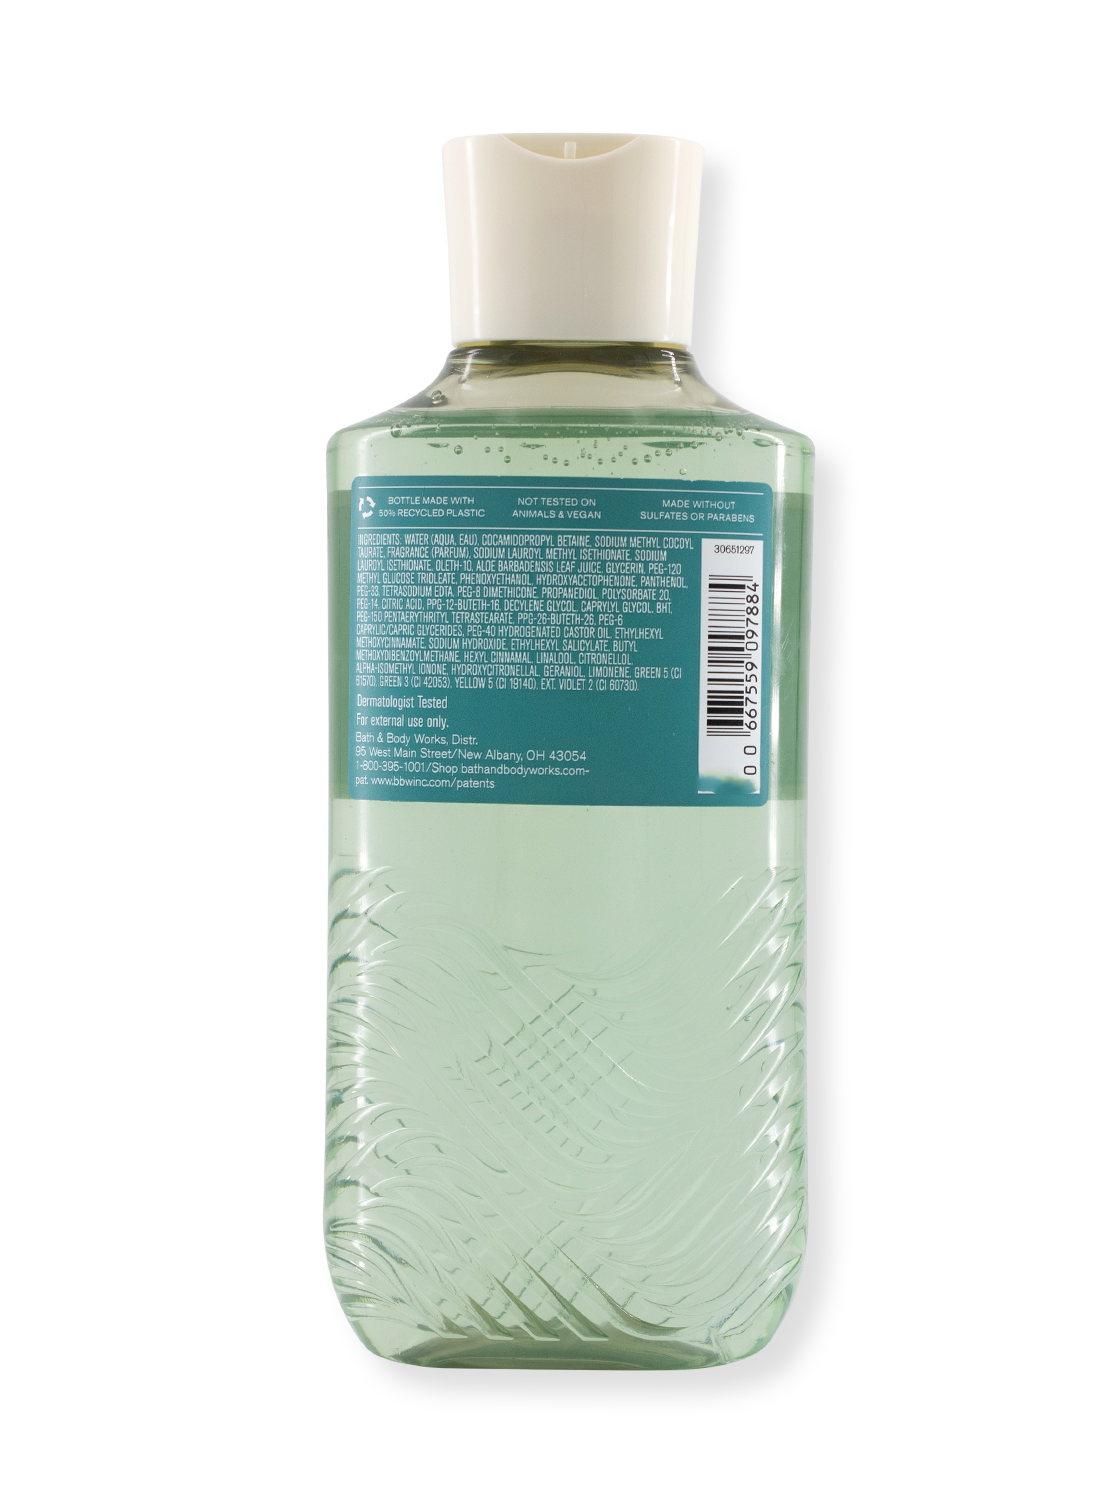 Shower gel/Body Wash - Water Lily Springs - 295ml